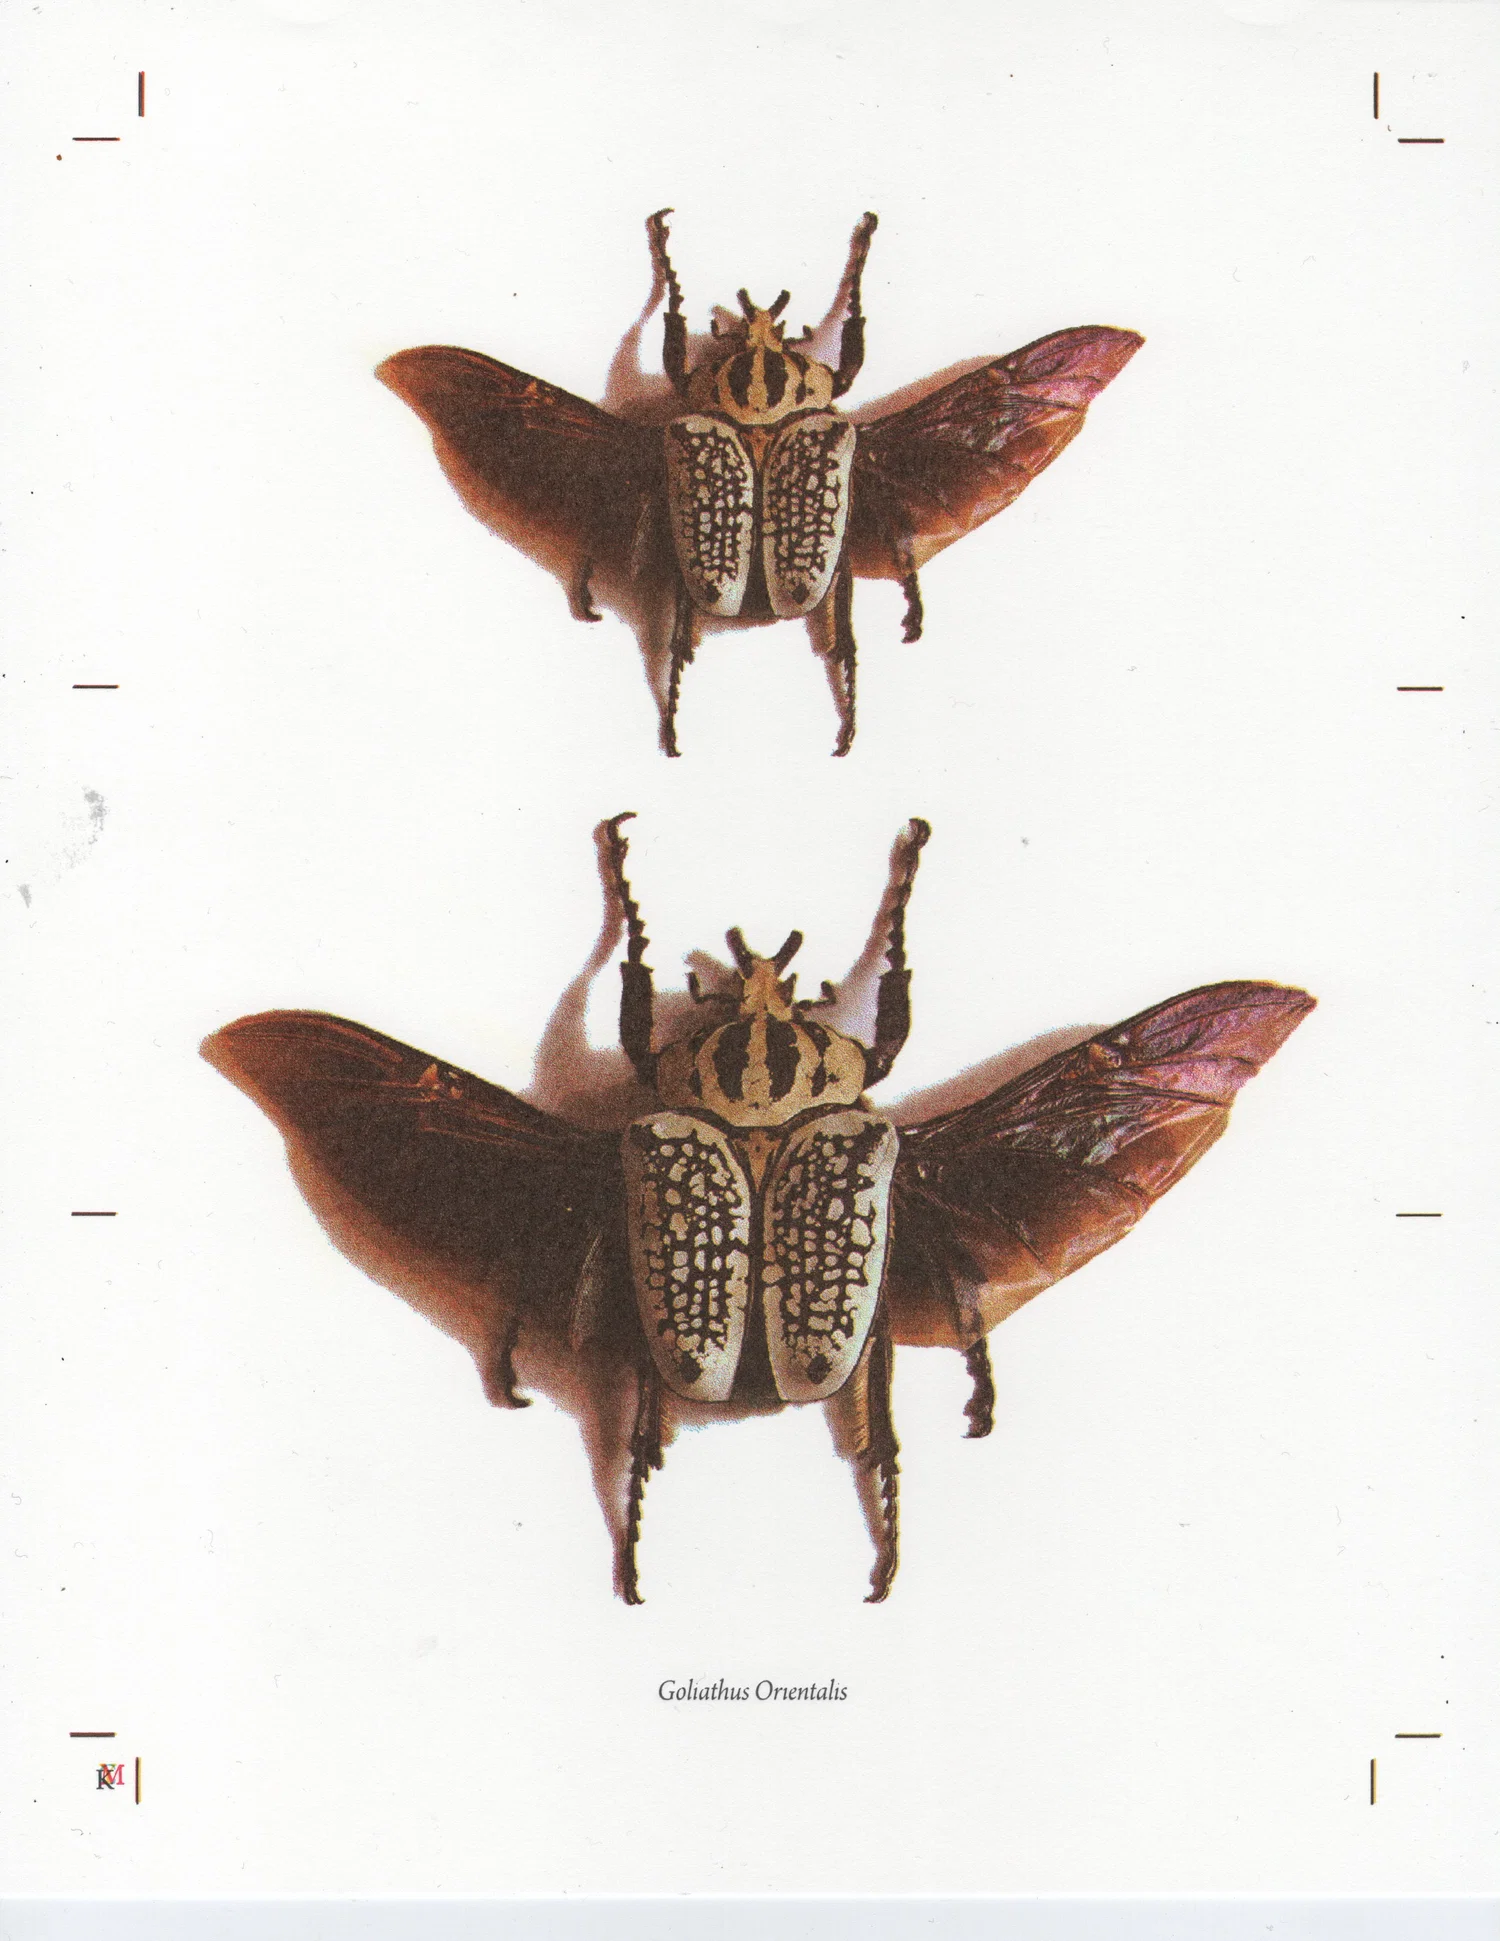 Male and female Goliath Beetles 